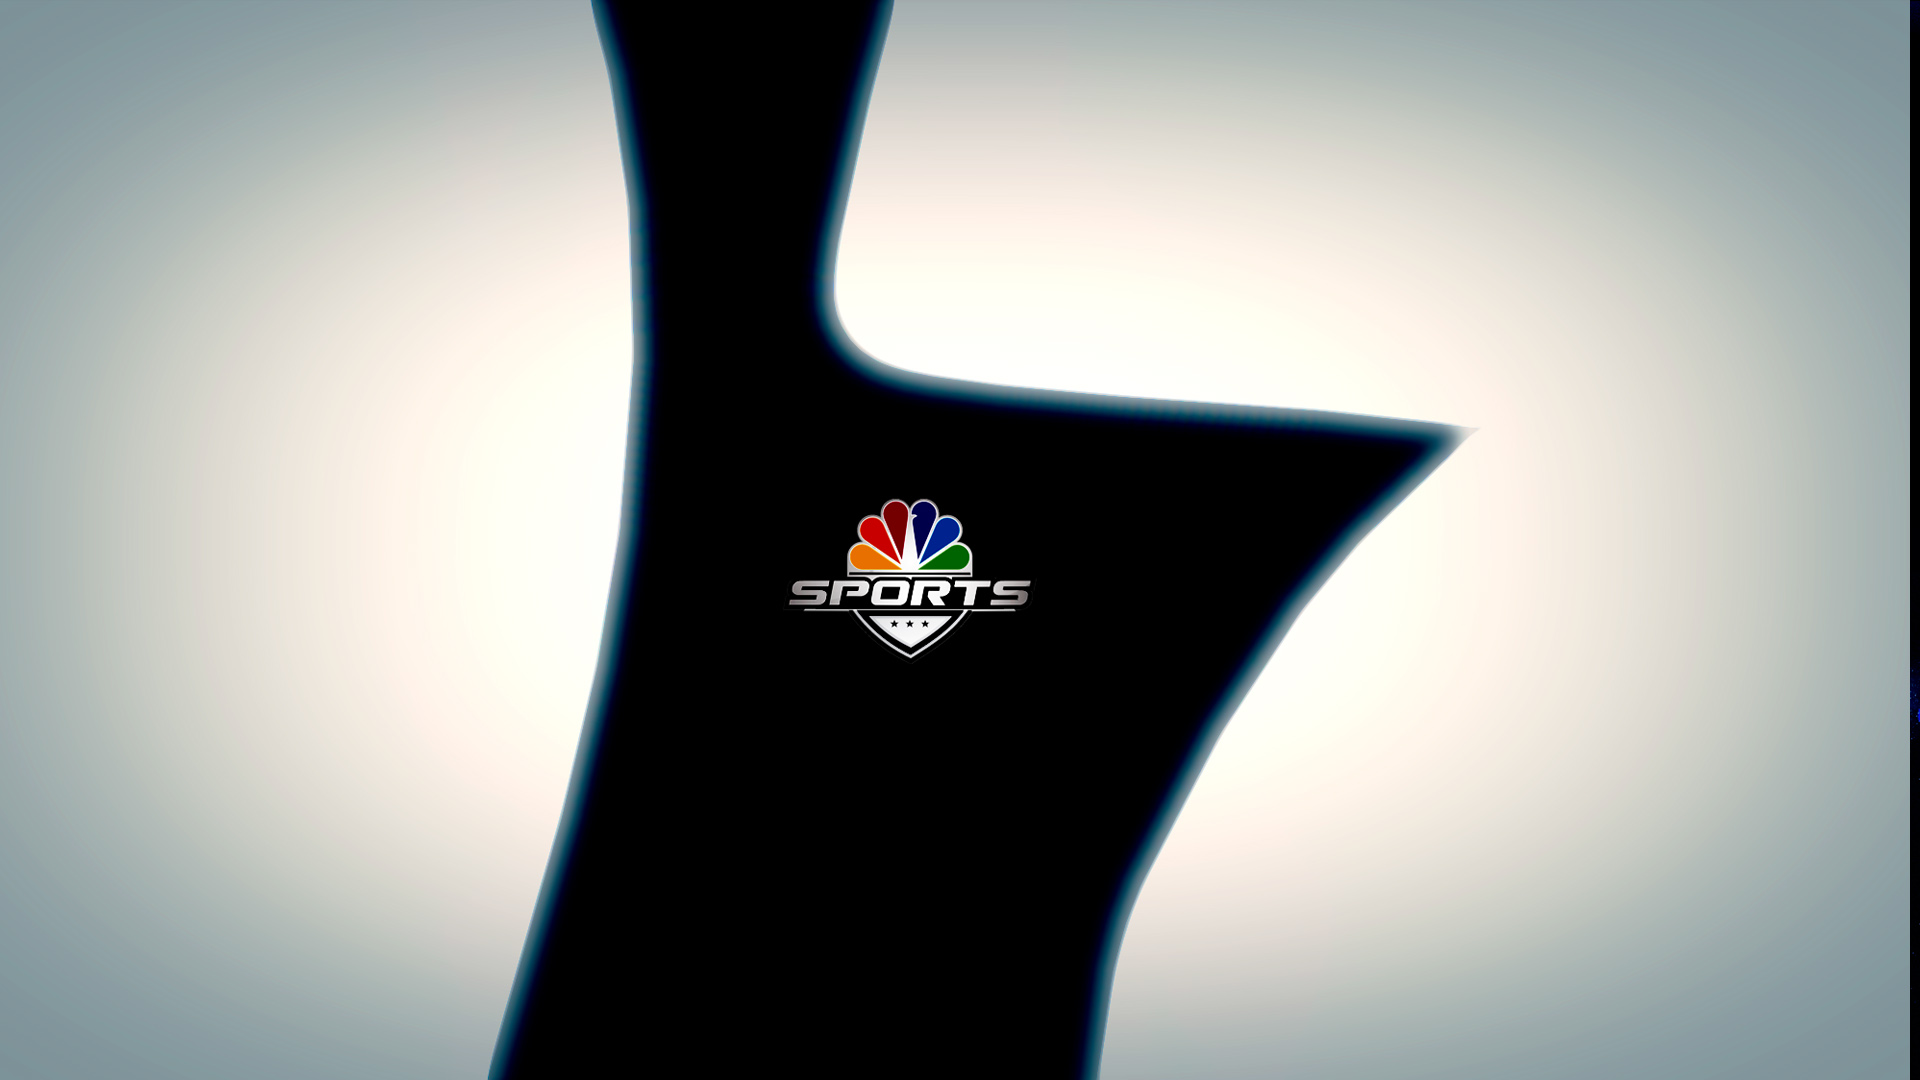 NBC_Sports-ALL_HD-1a.jpg